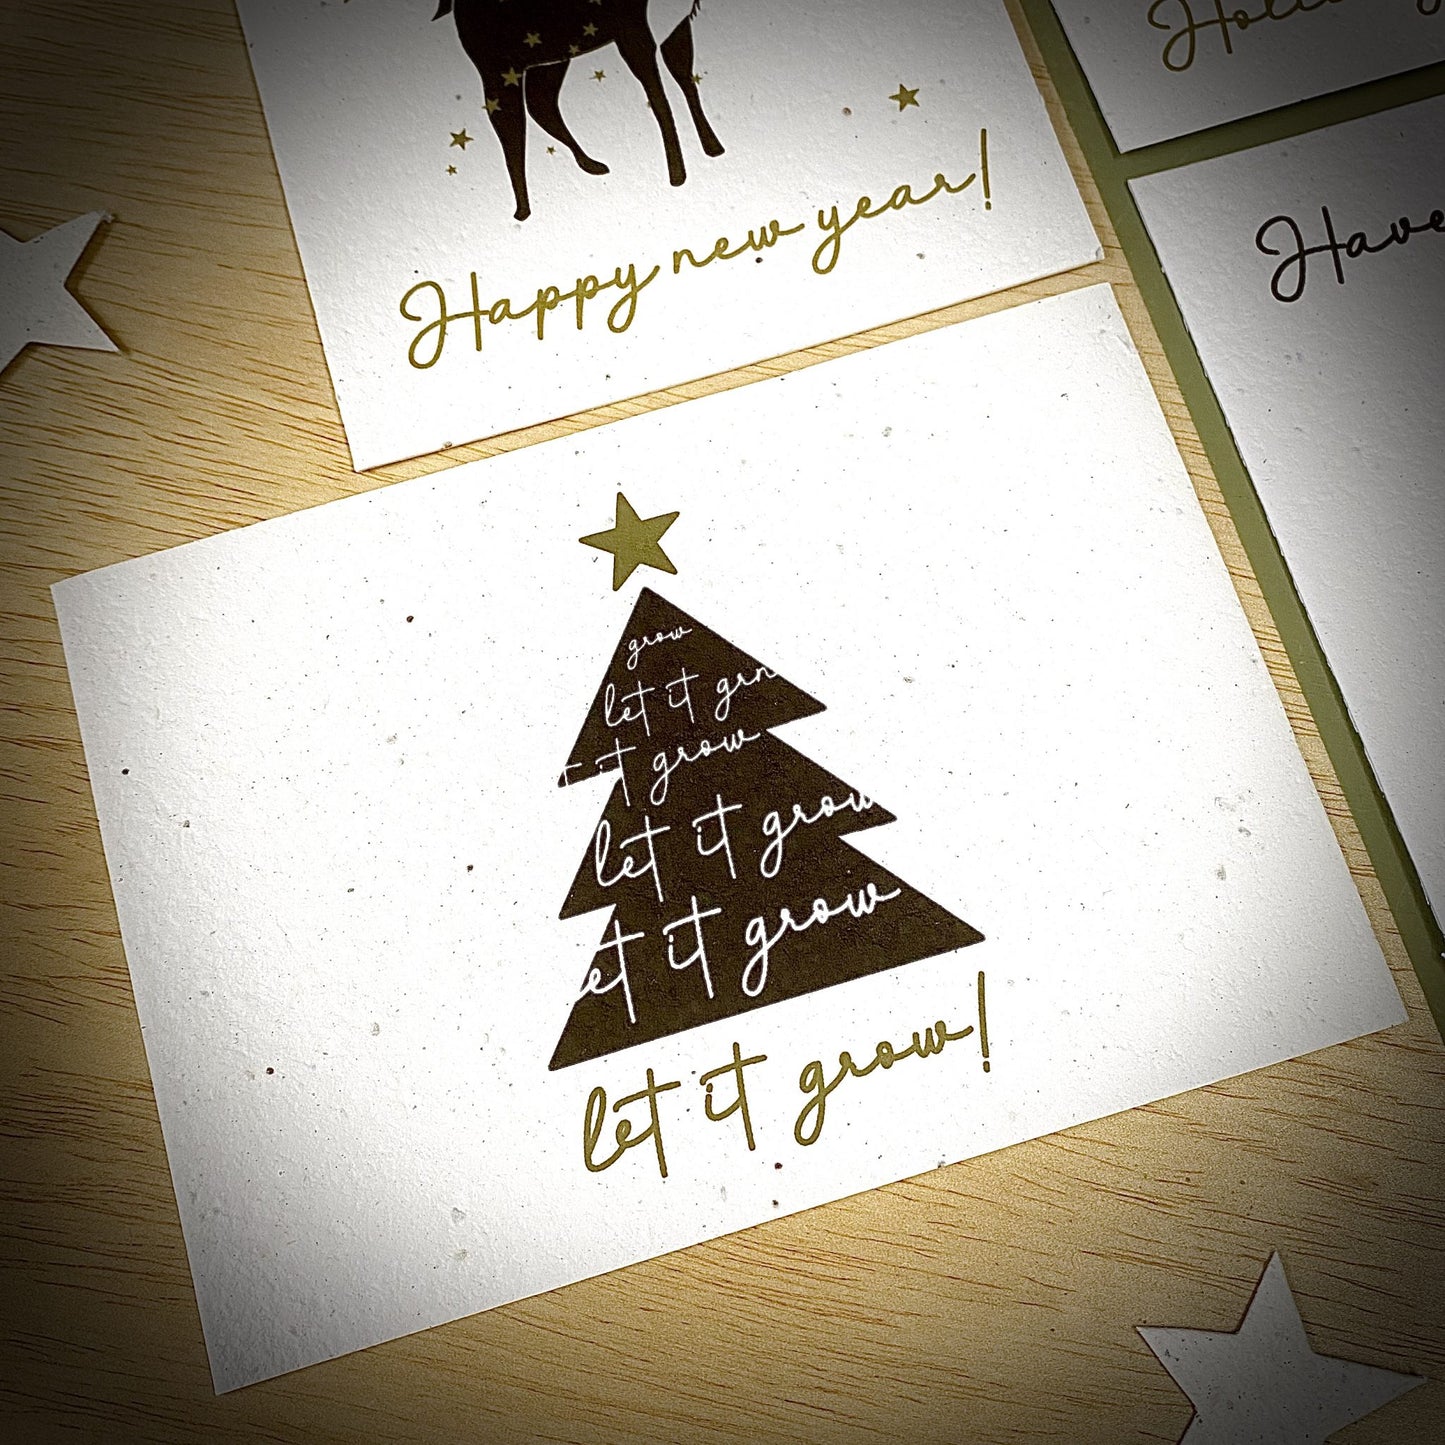 BLOOM YOUR MESSAGE Saatgutkarte "Let it grow!" mit Weihnachtsbaum Motiv | 100% recyceltes Material